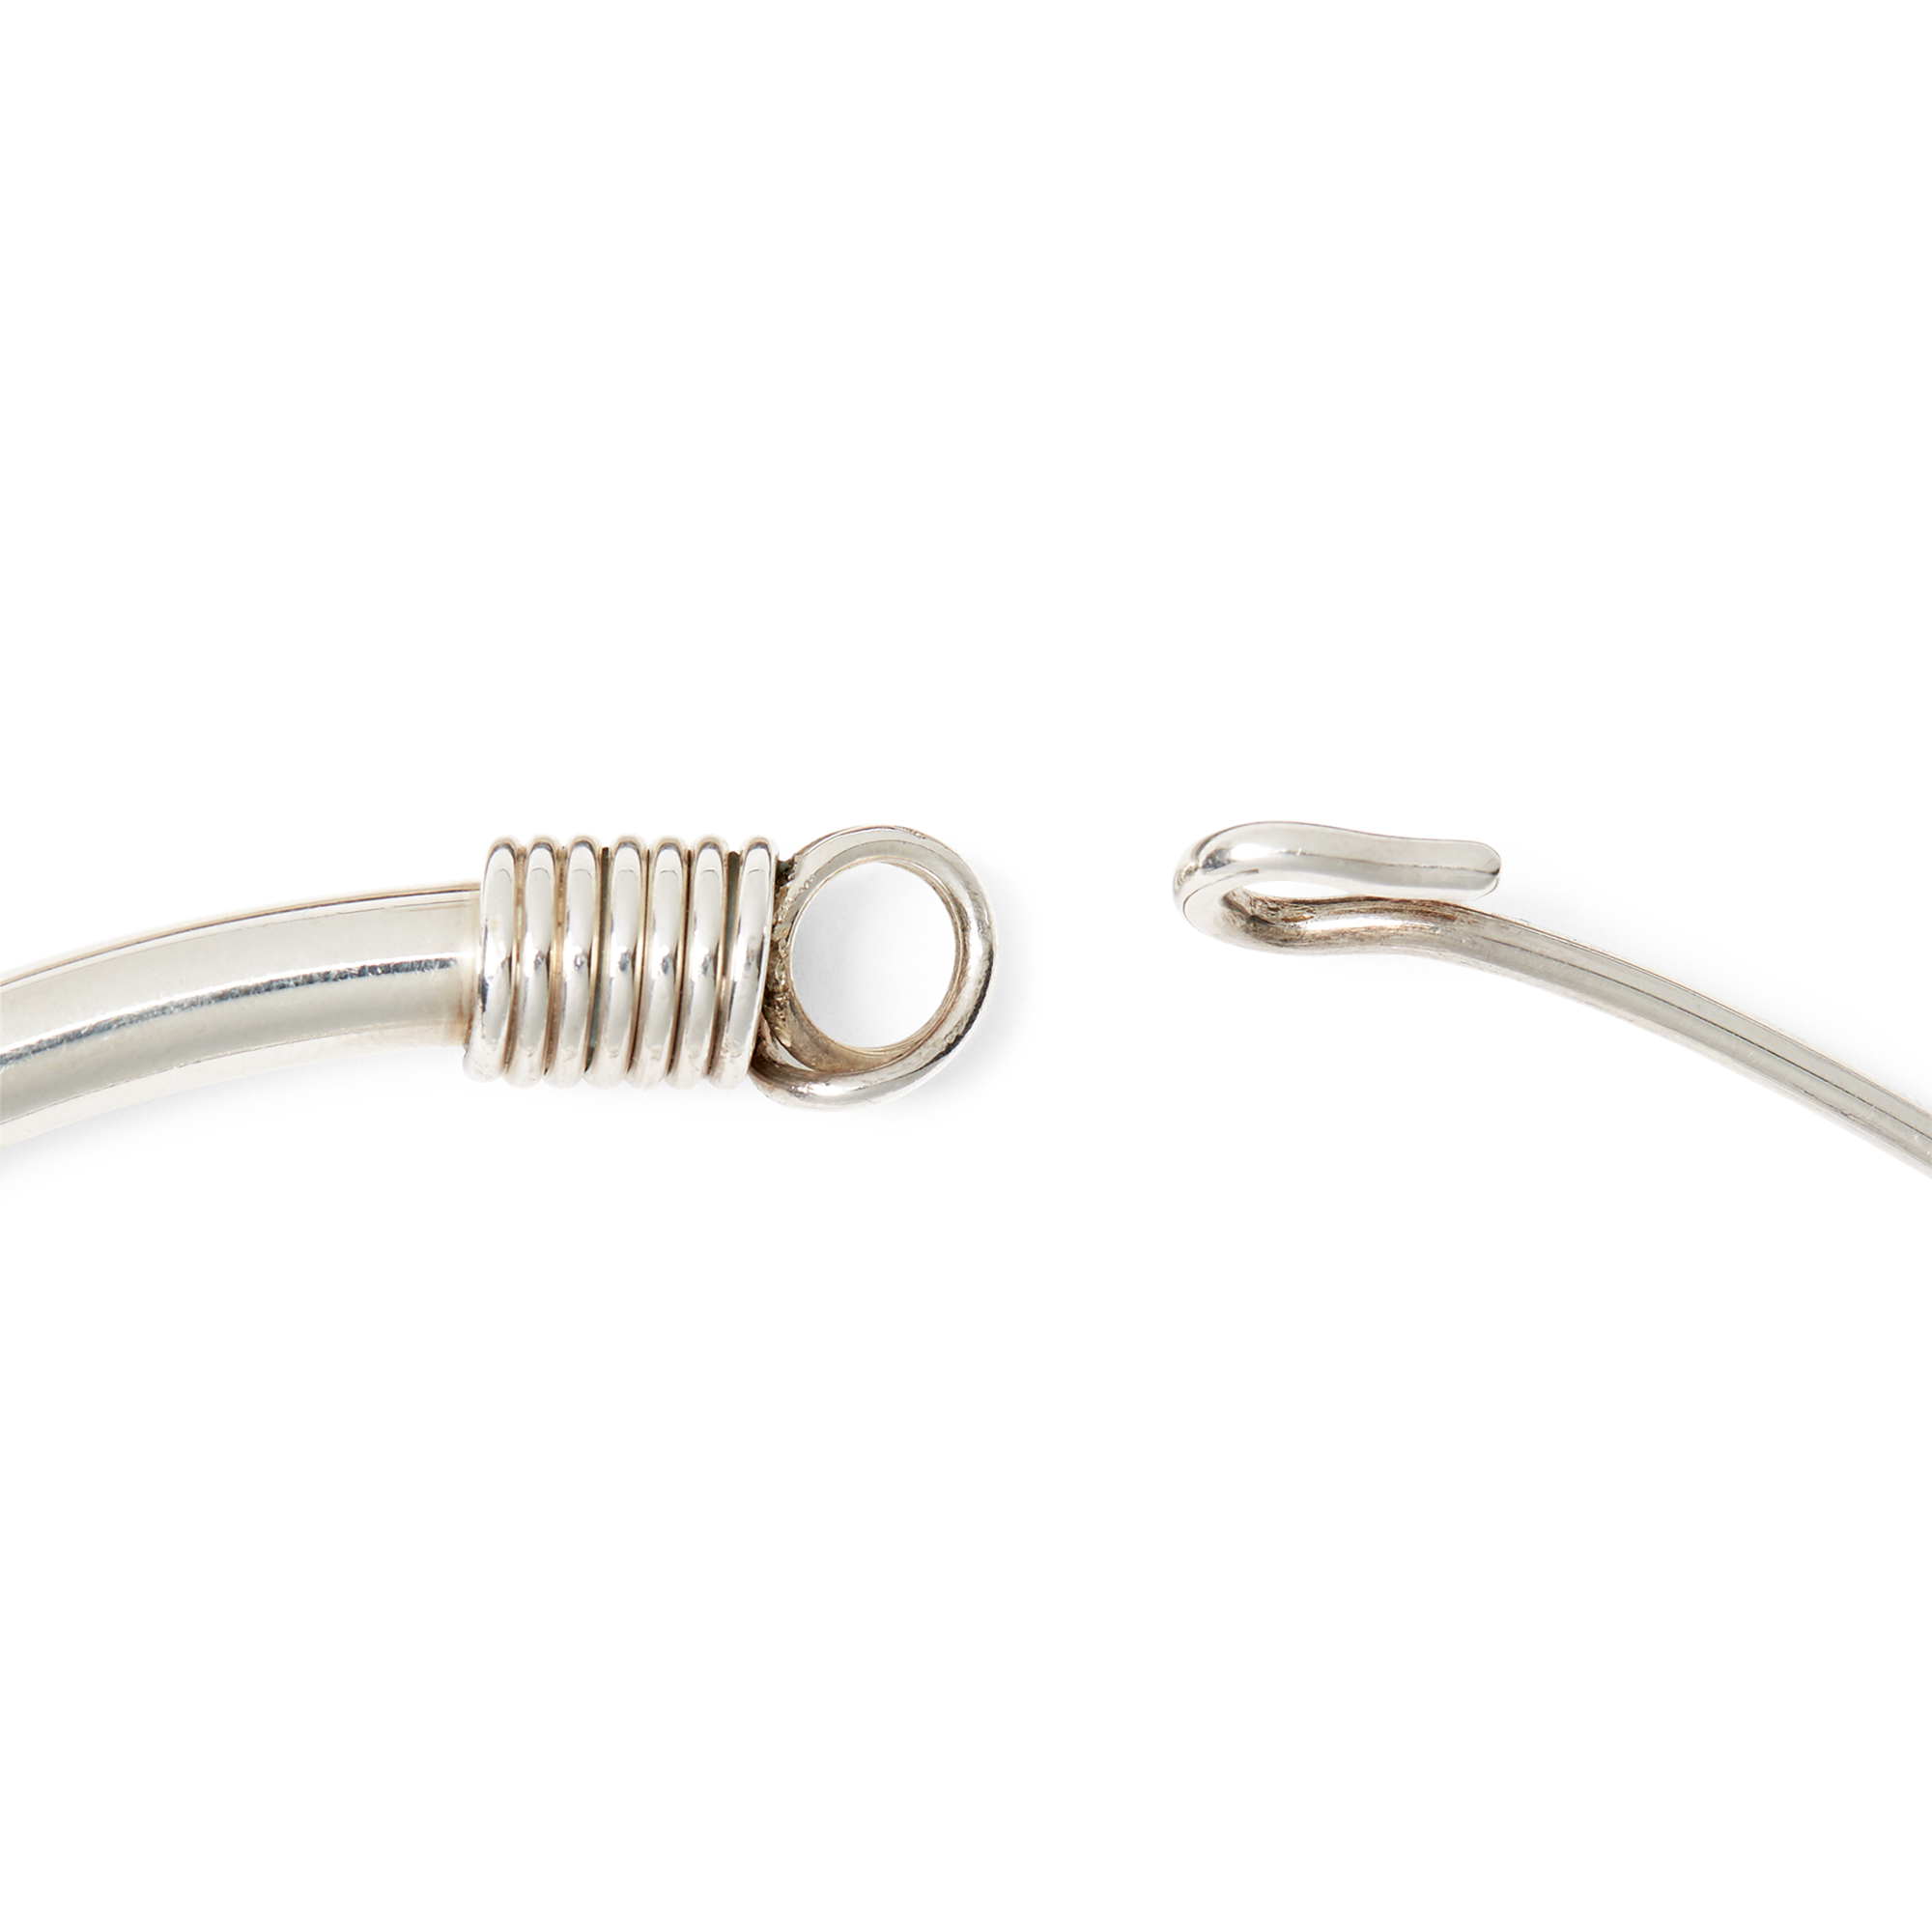 Ralph Lauren Whip Collar Necklace. 2